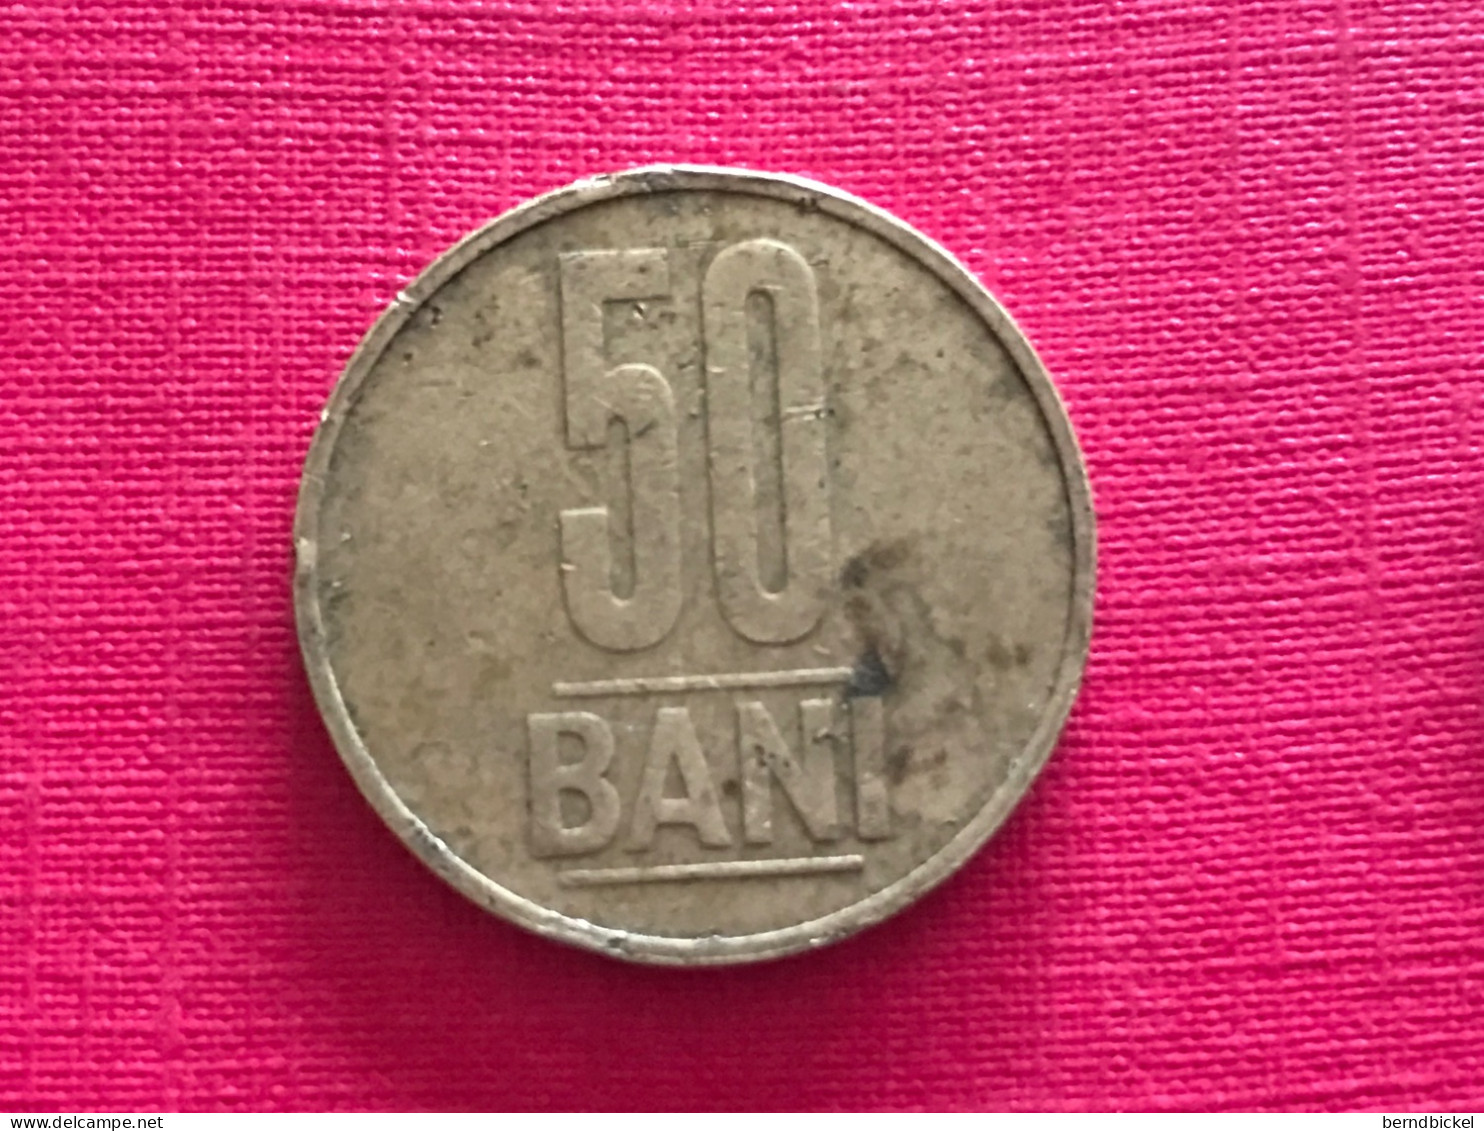 Münze Münzen Umlaufmünze Rumänien 50 Bani 2006 - Rumänien